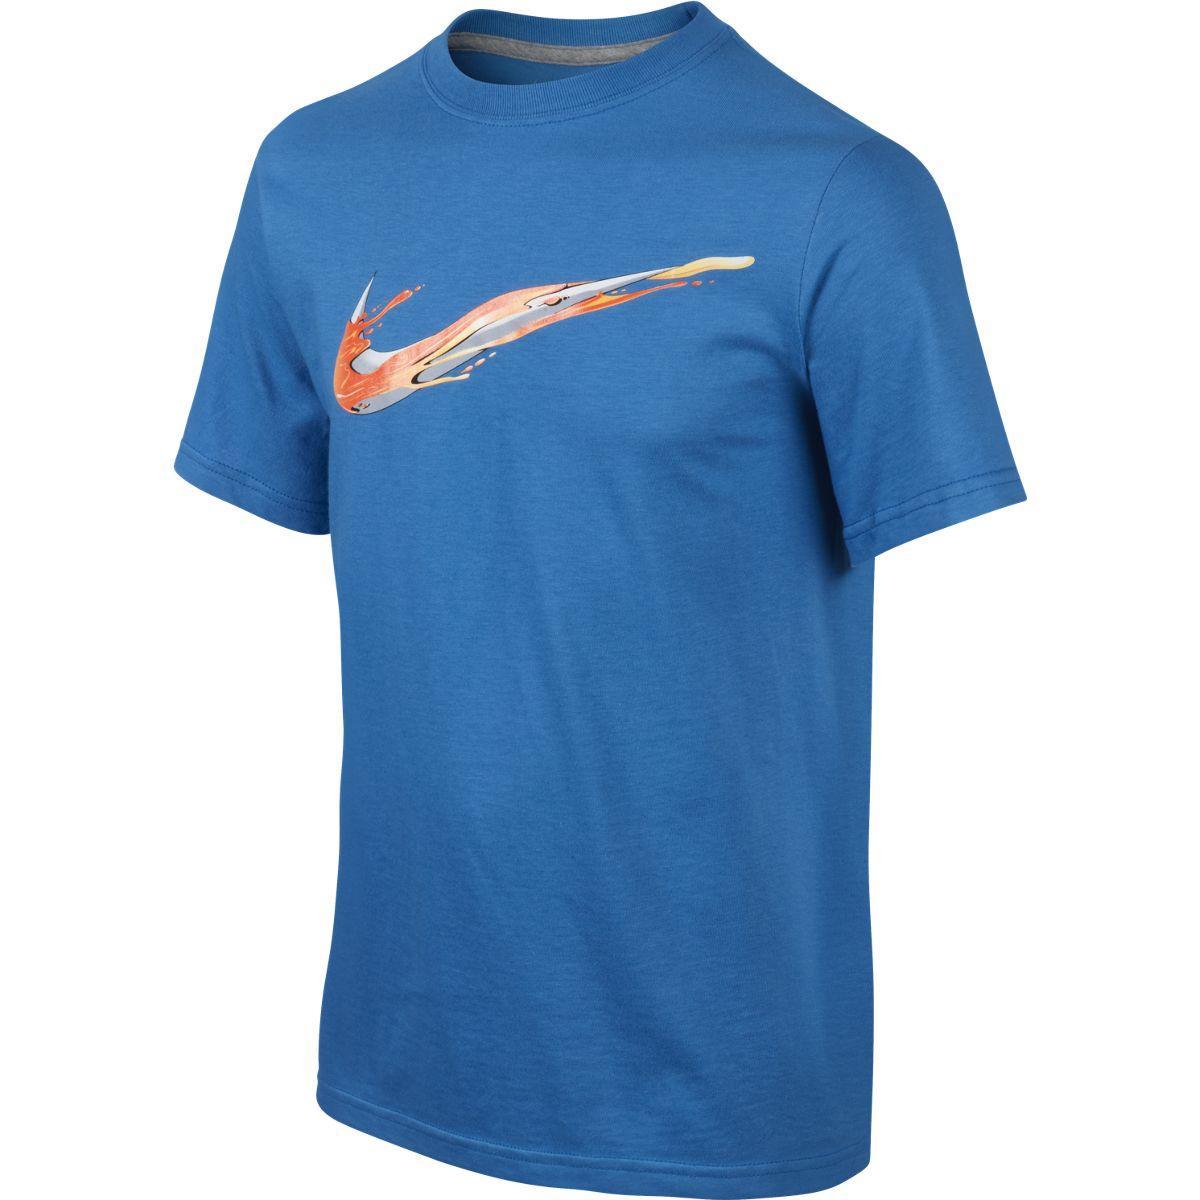 Nike Boys Speed Swoosh Tee - Light Photo Blue - Tennisnuts.com